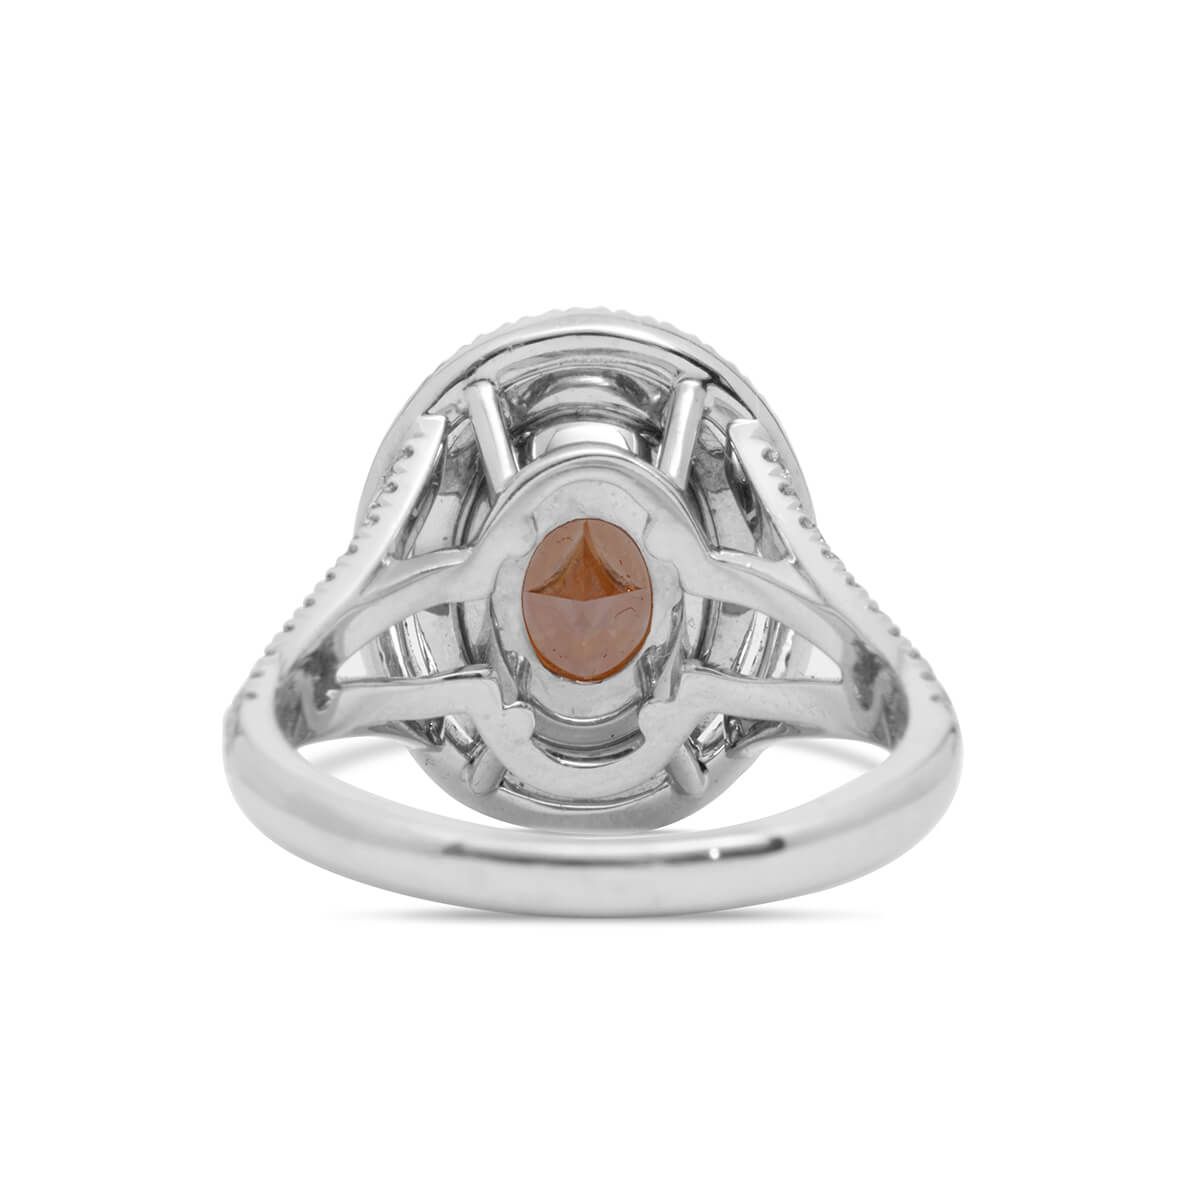 Light Yellow Diamond Ring, 2.05 Carat, Oval shape, GIA Certified, 1182007856